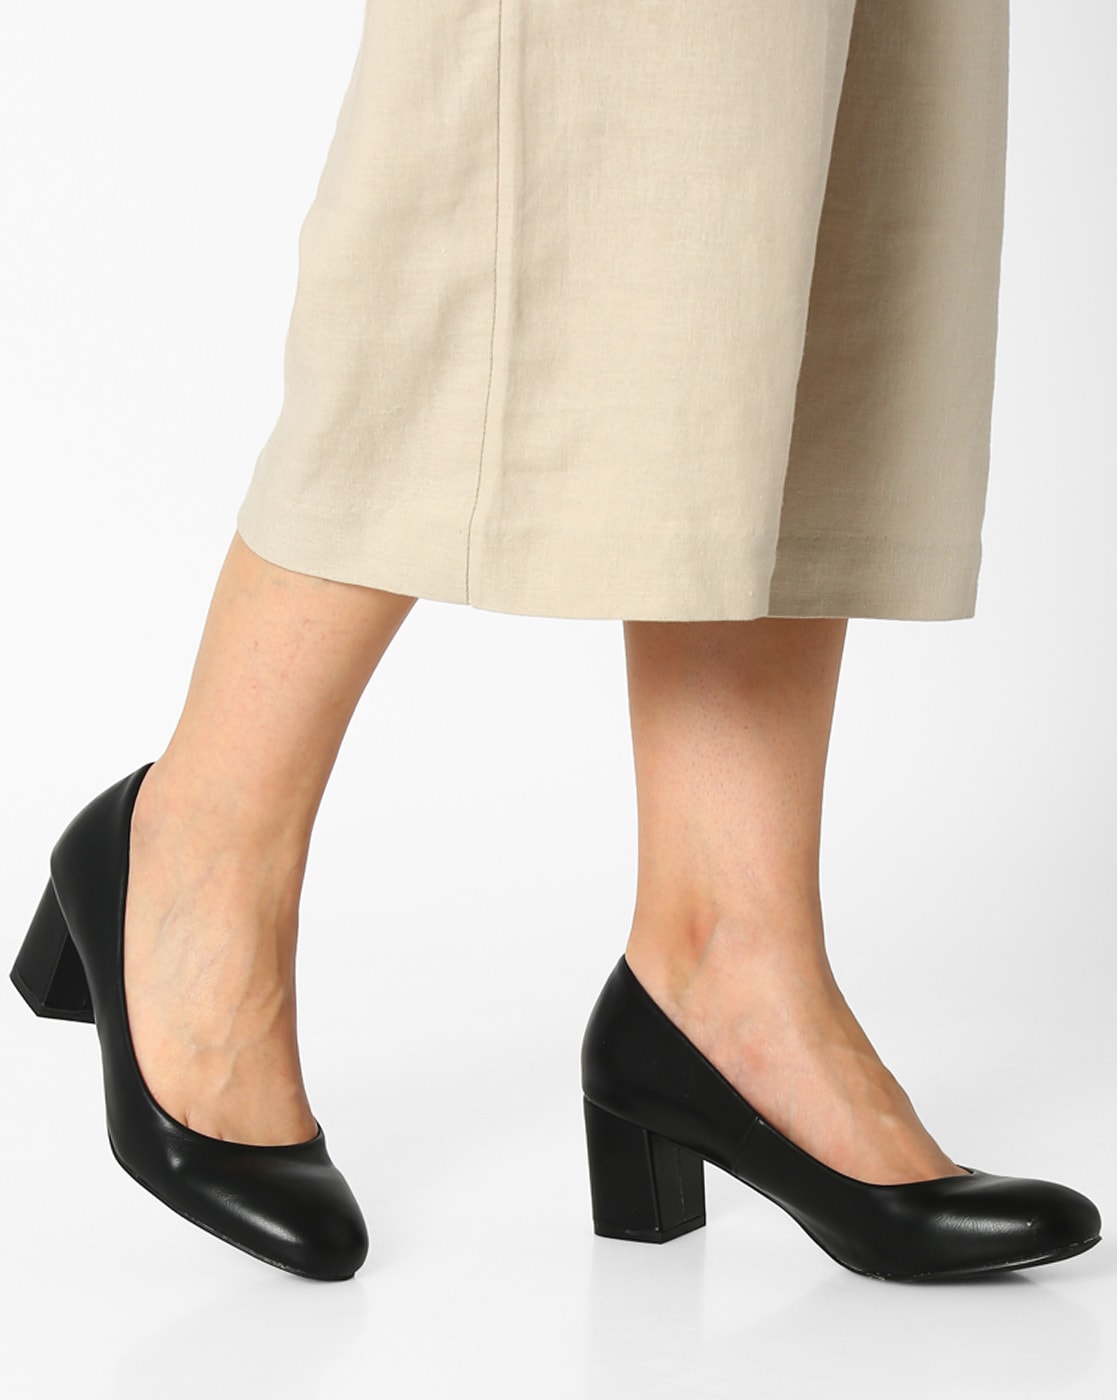 BCB GIRLS High Heels Formal Dress Shoes Women's Size 7 1/2 W Black Satin |  eBay